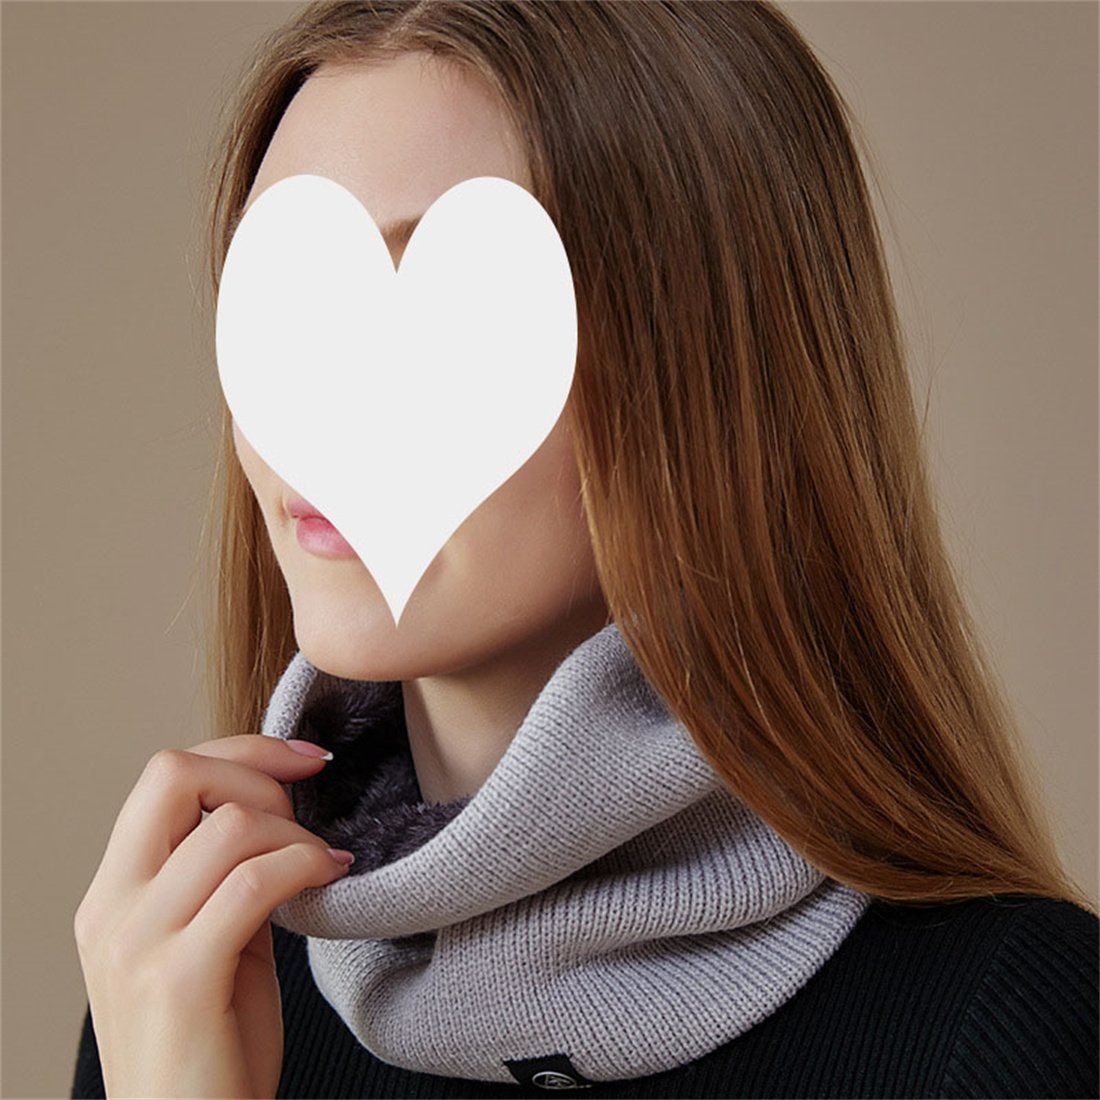 Winter Unisex verdickt DÖRÖY Modeschal gepolstert einfarbig Hals warm Abdeckung Schal, Grau